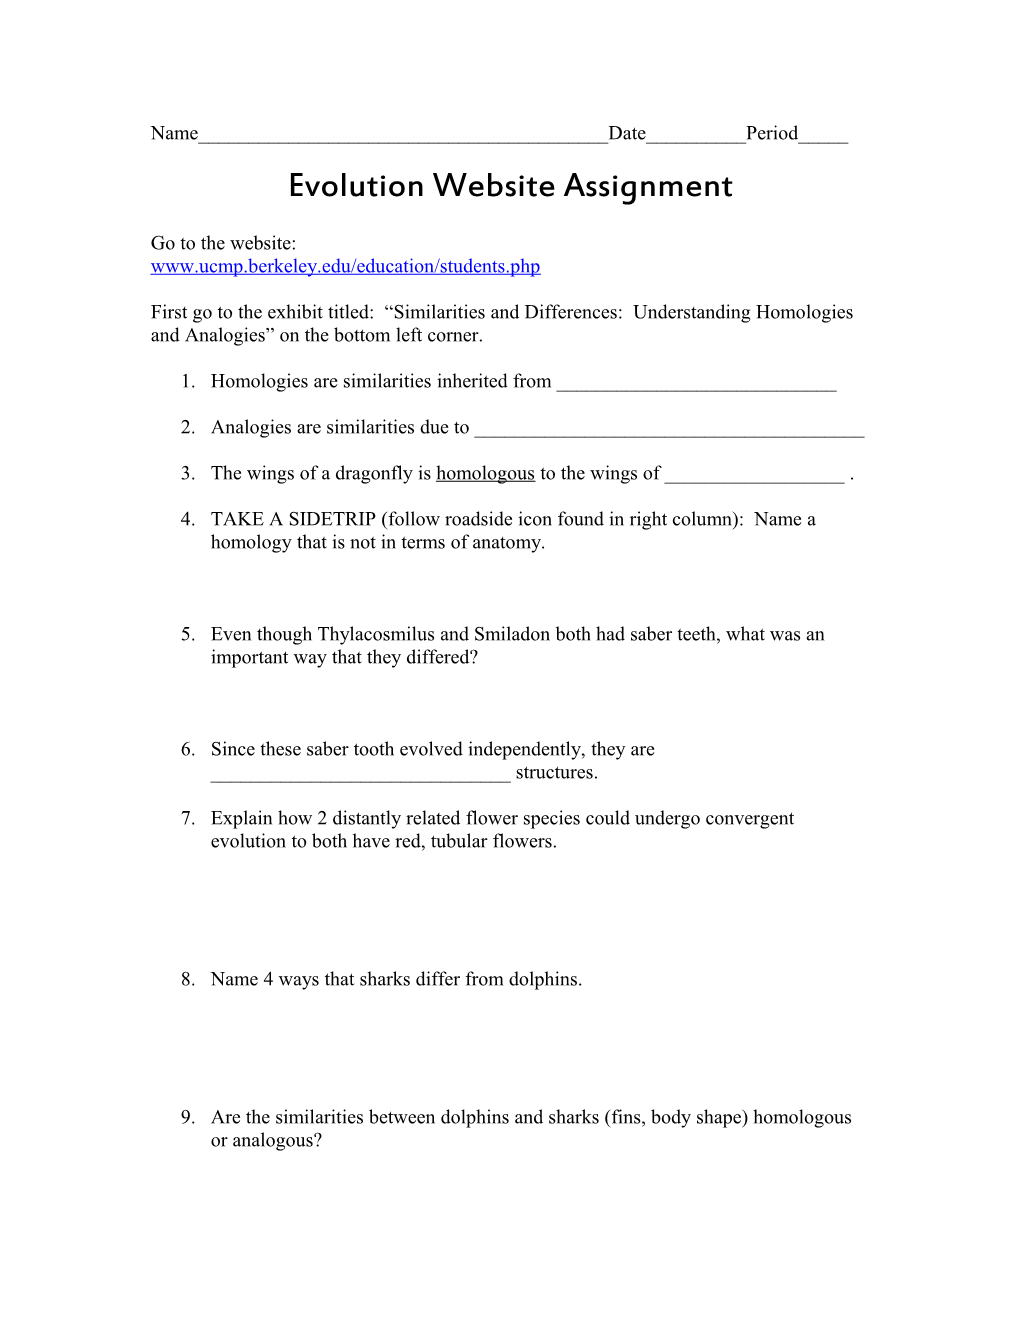 Evolution Website Assignment